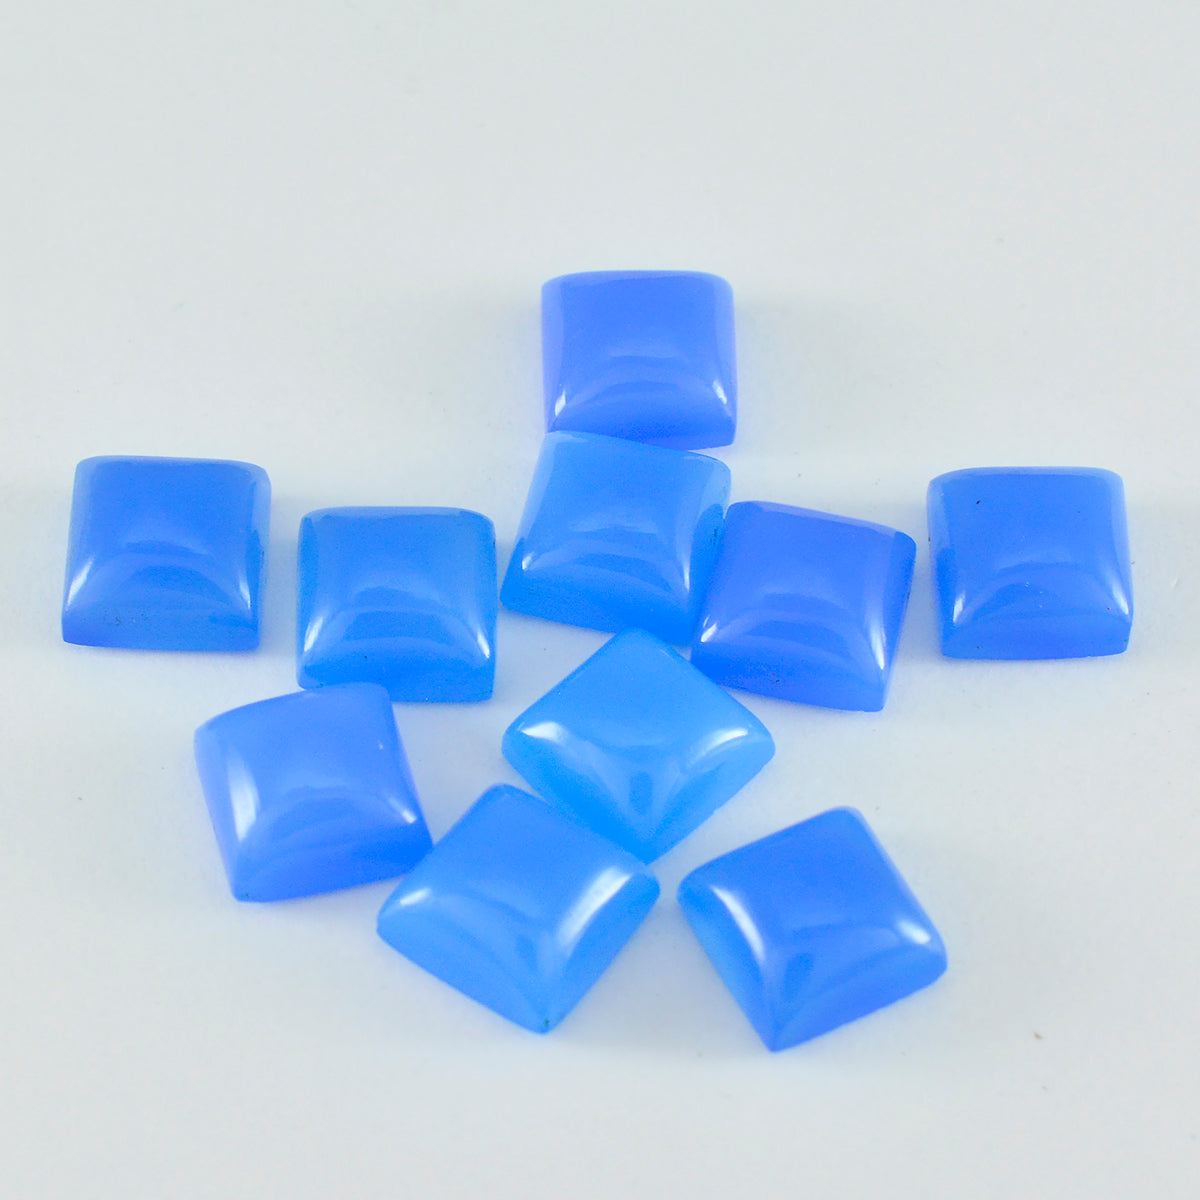 Riyogems 1PC Blue Chalcedony Cabochon 7x7 mm Square Shape excellent Quality Gems